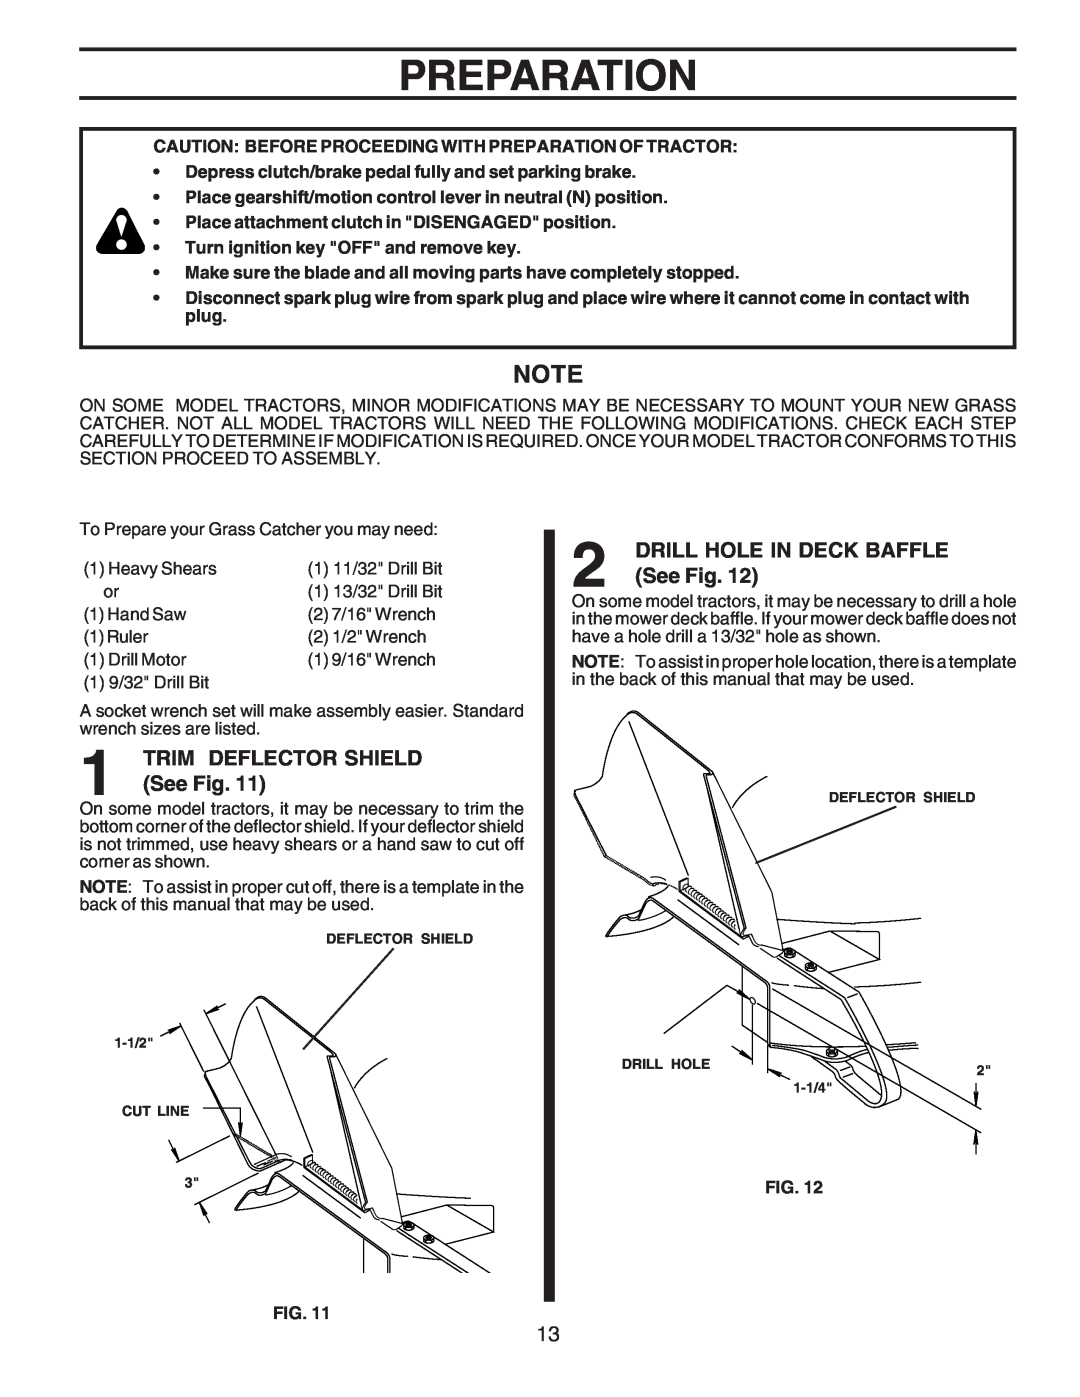 Husqvarna C38D manual Preparation, Trim Deflector Shield, See Fig, Drill Hole In Deck Baffle 